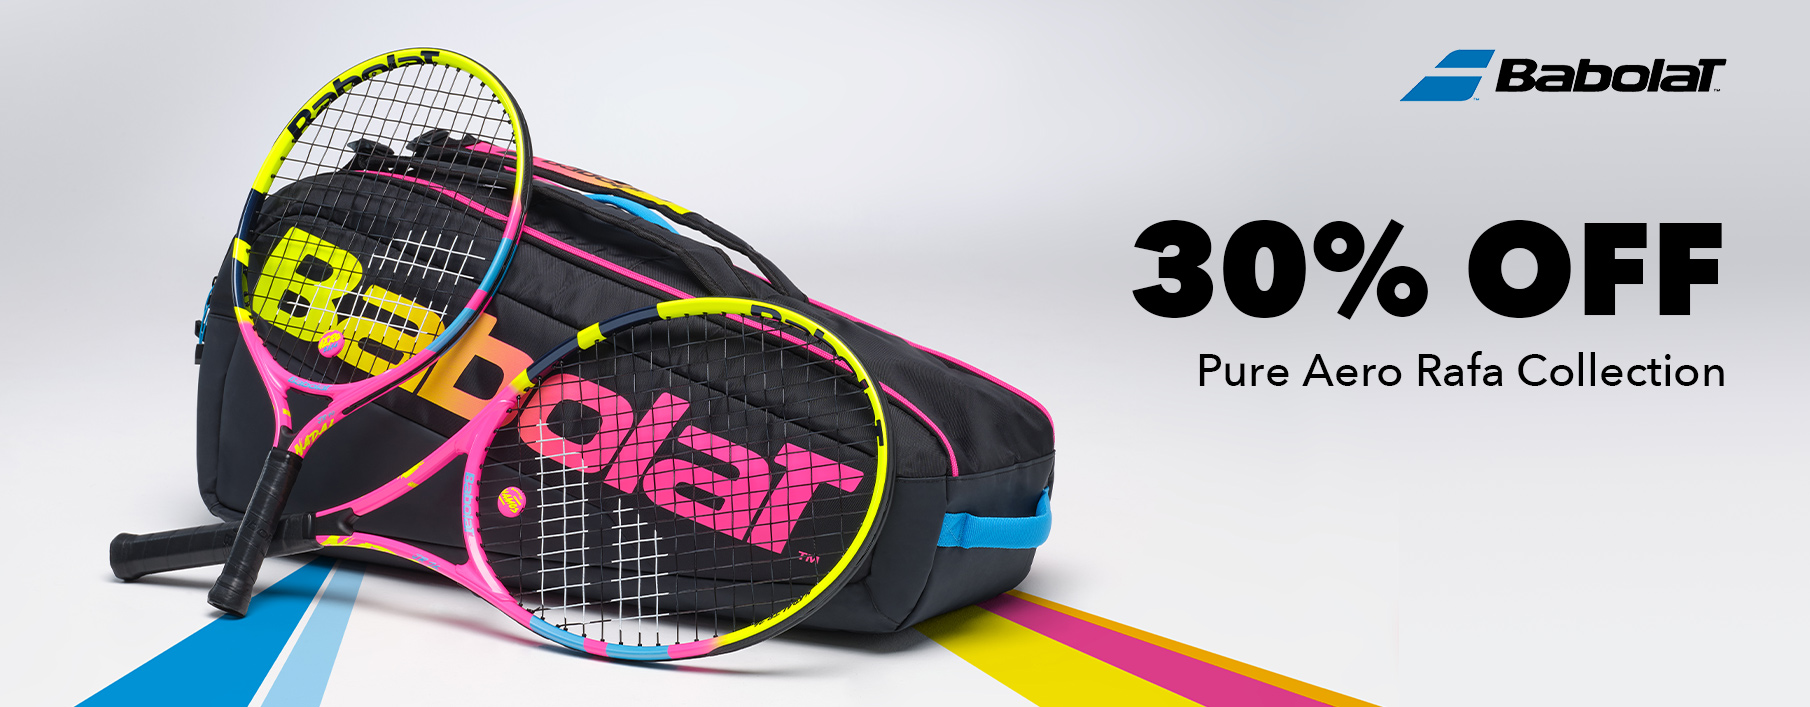 babolat 30% off promo deal rafa rafael nadal racquet racket racquets bags bag